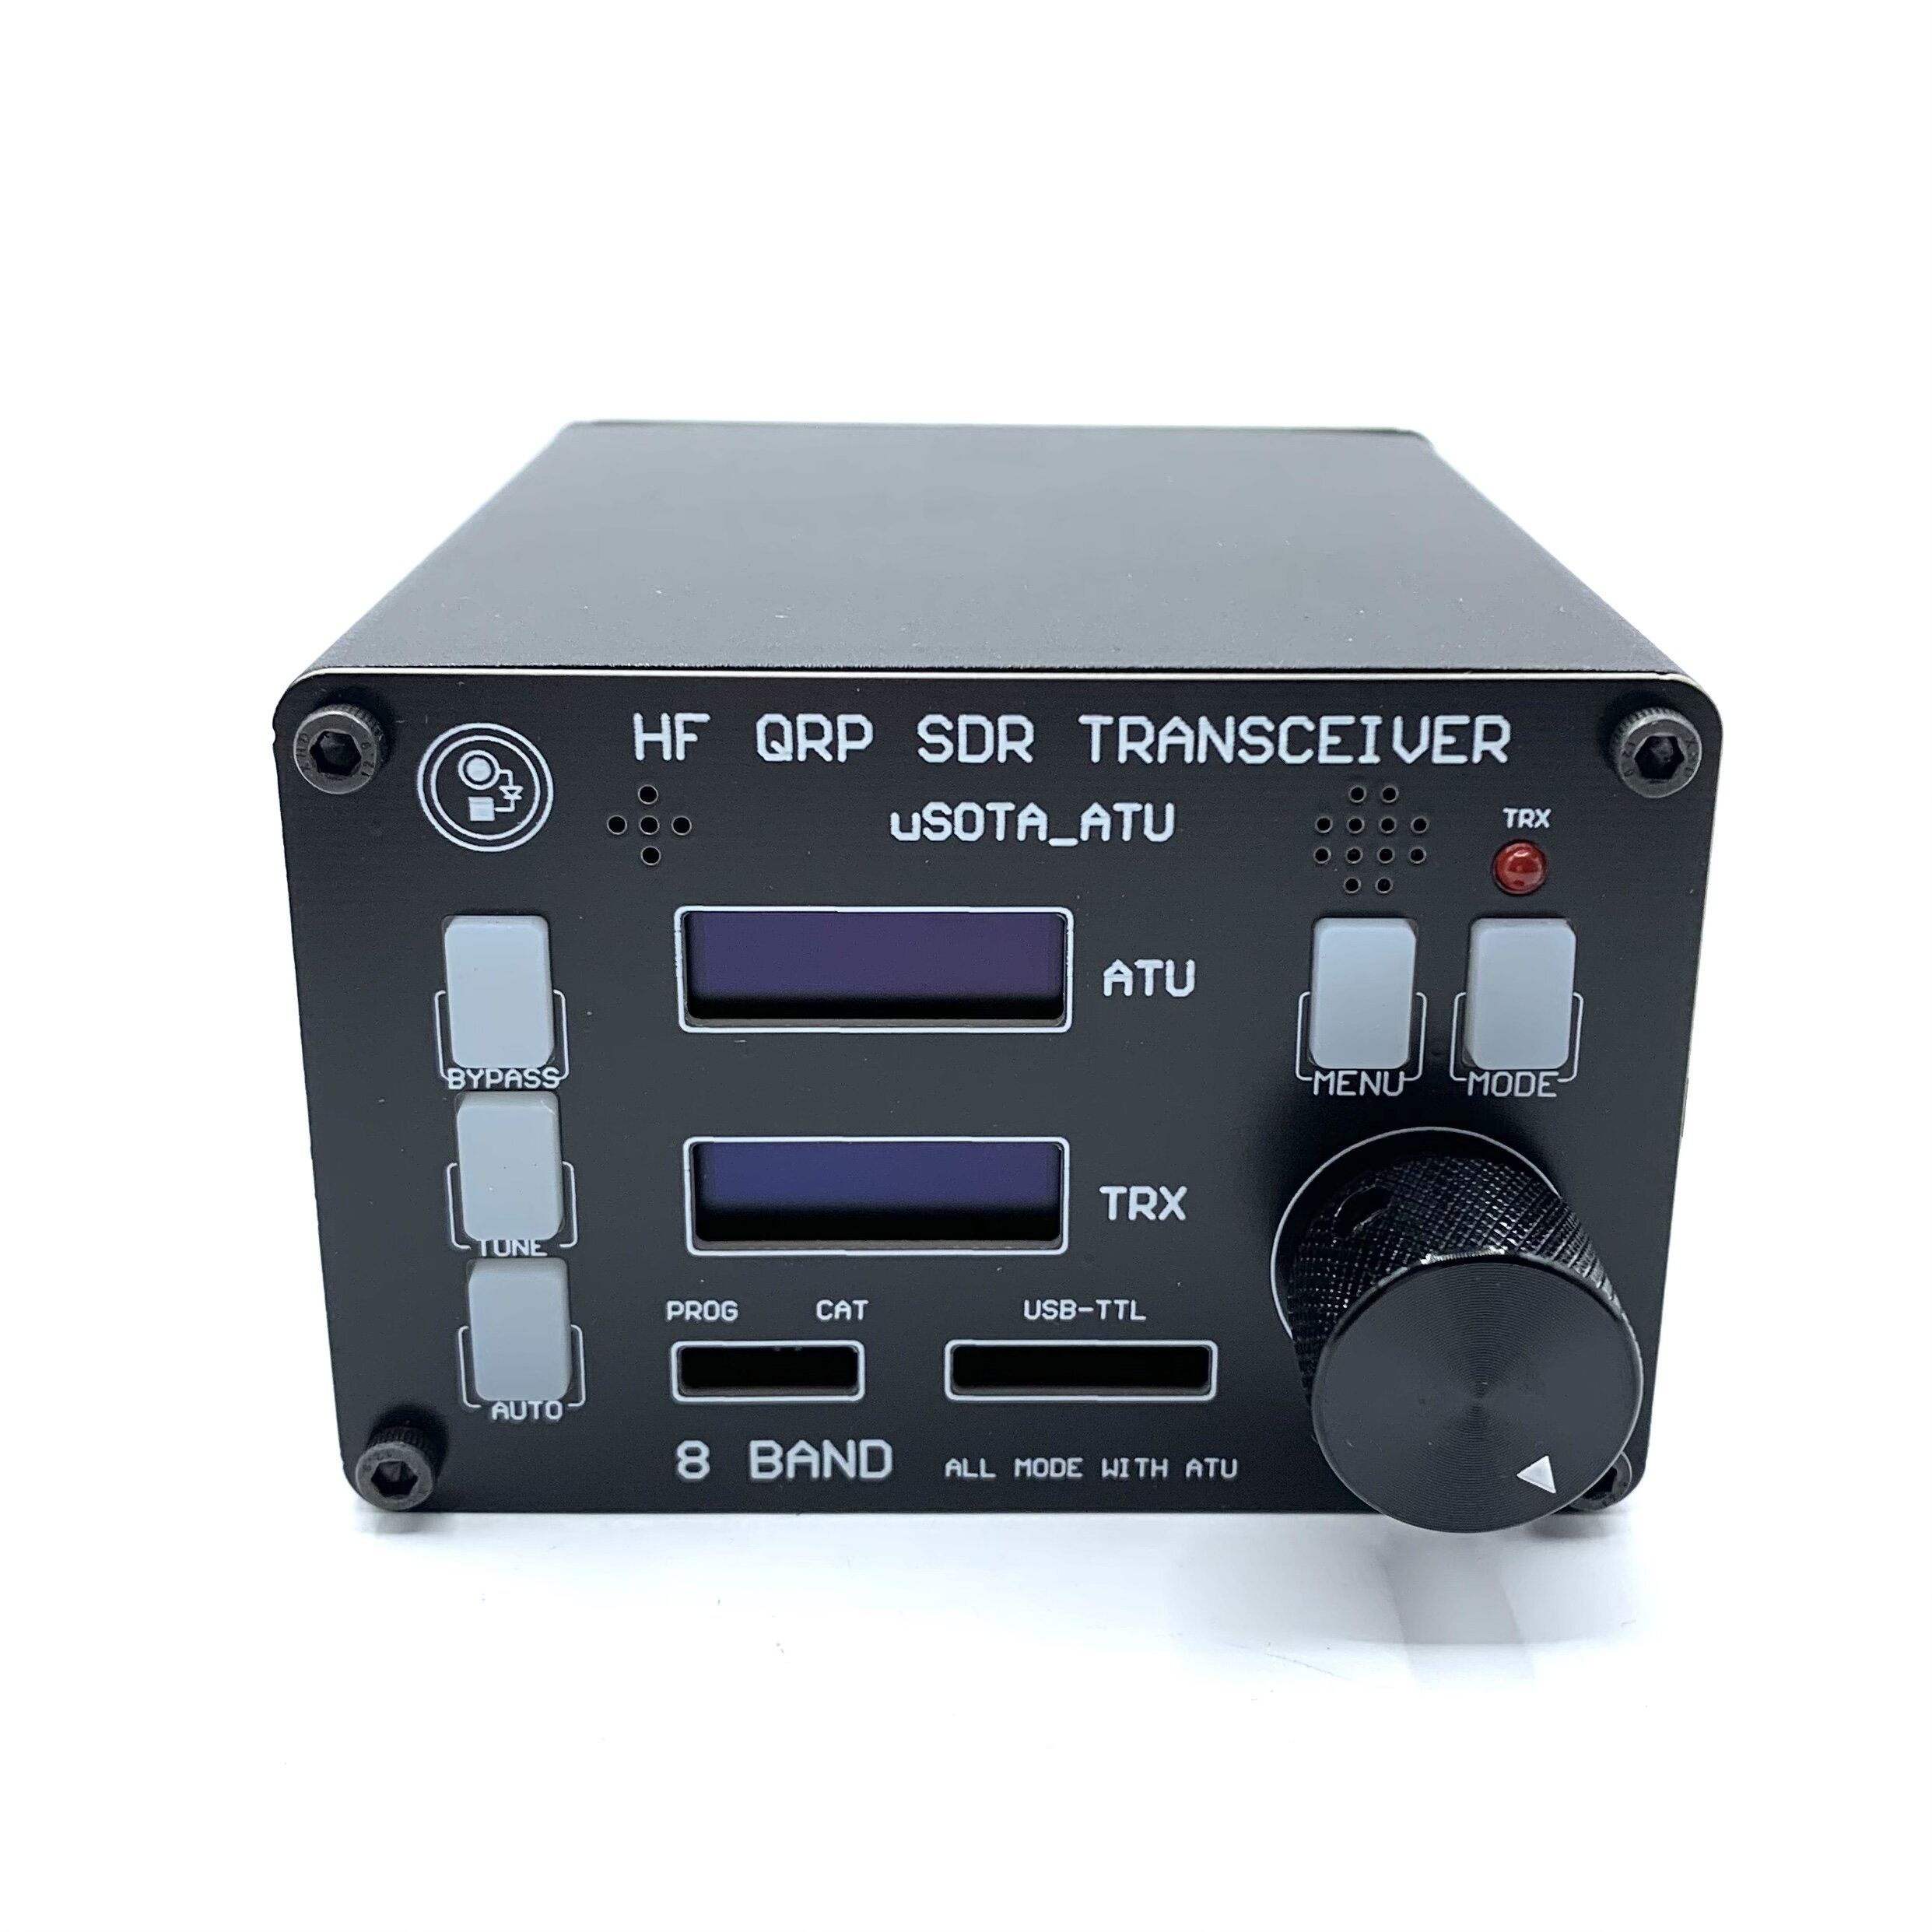 USDX SDR Transceiver All Mode 8 Band HF Ham Radio QRP CW Transceiver Built-in ATU-100 Antenna Tuner Dual OLED Screen Dis